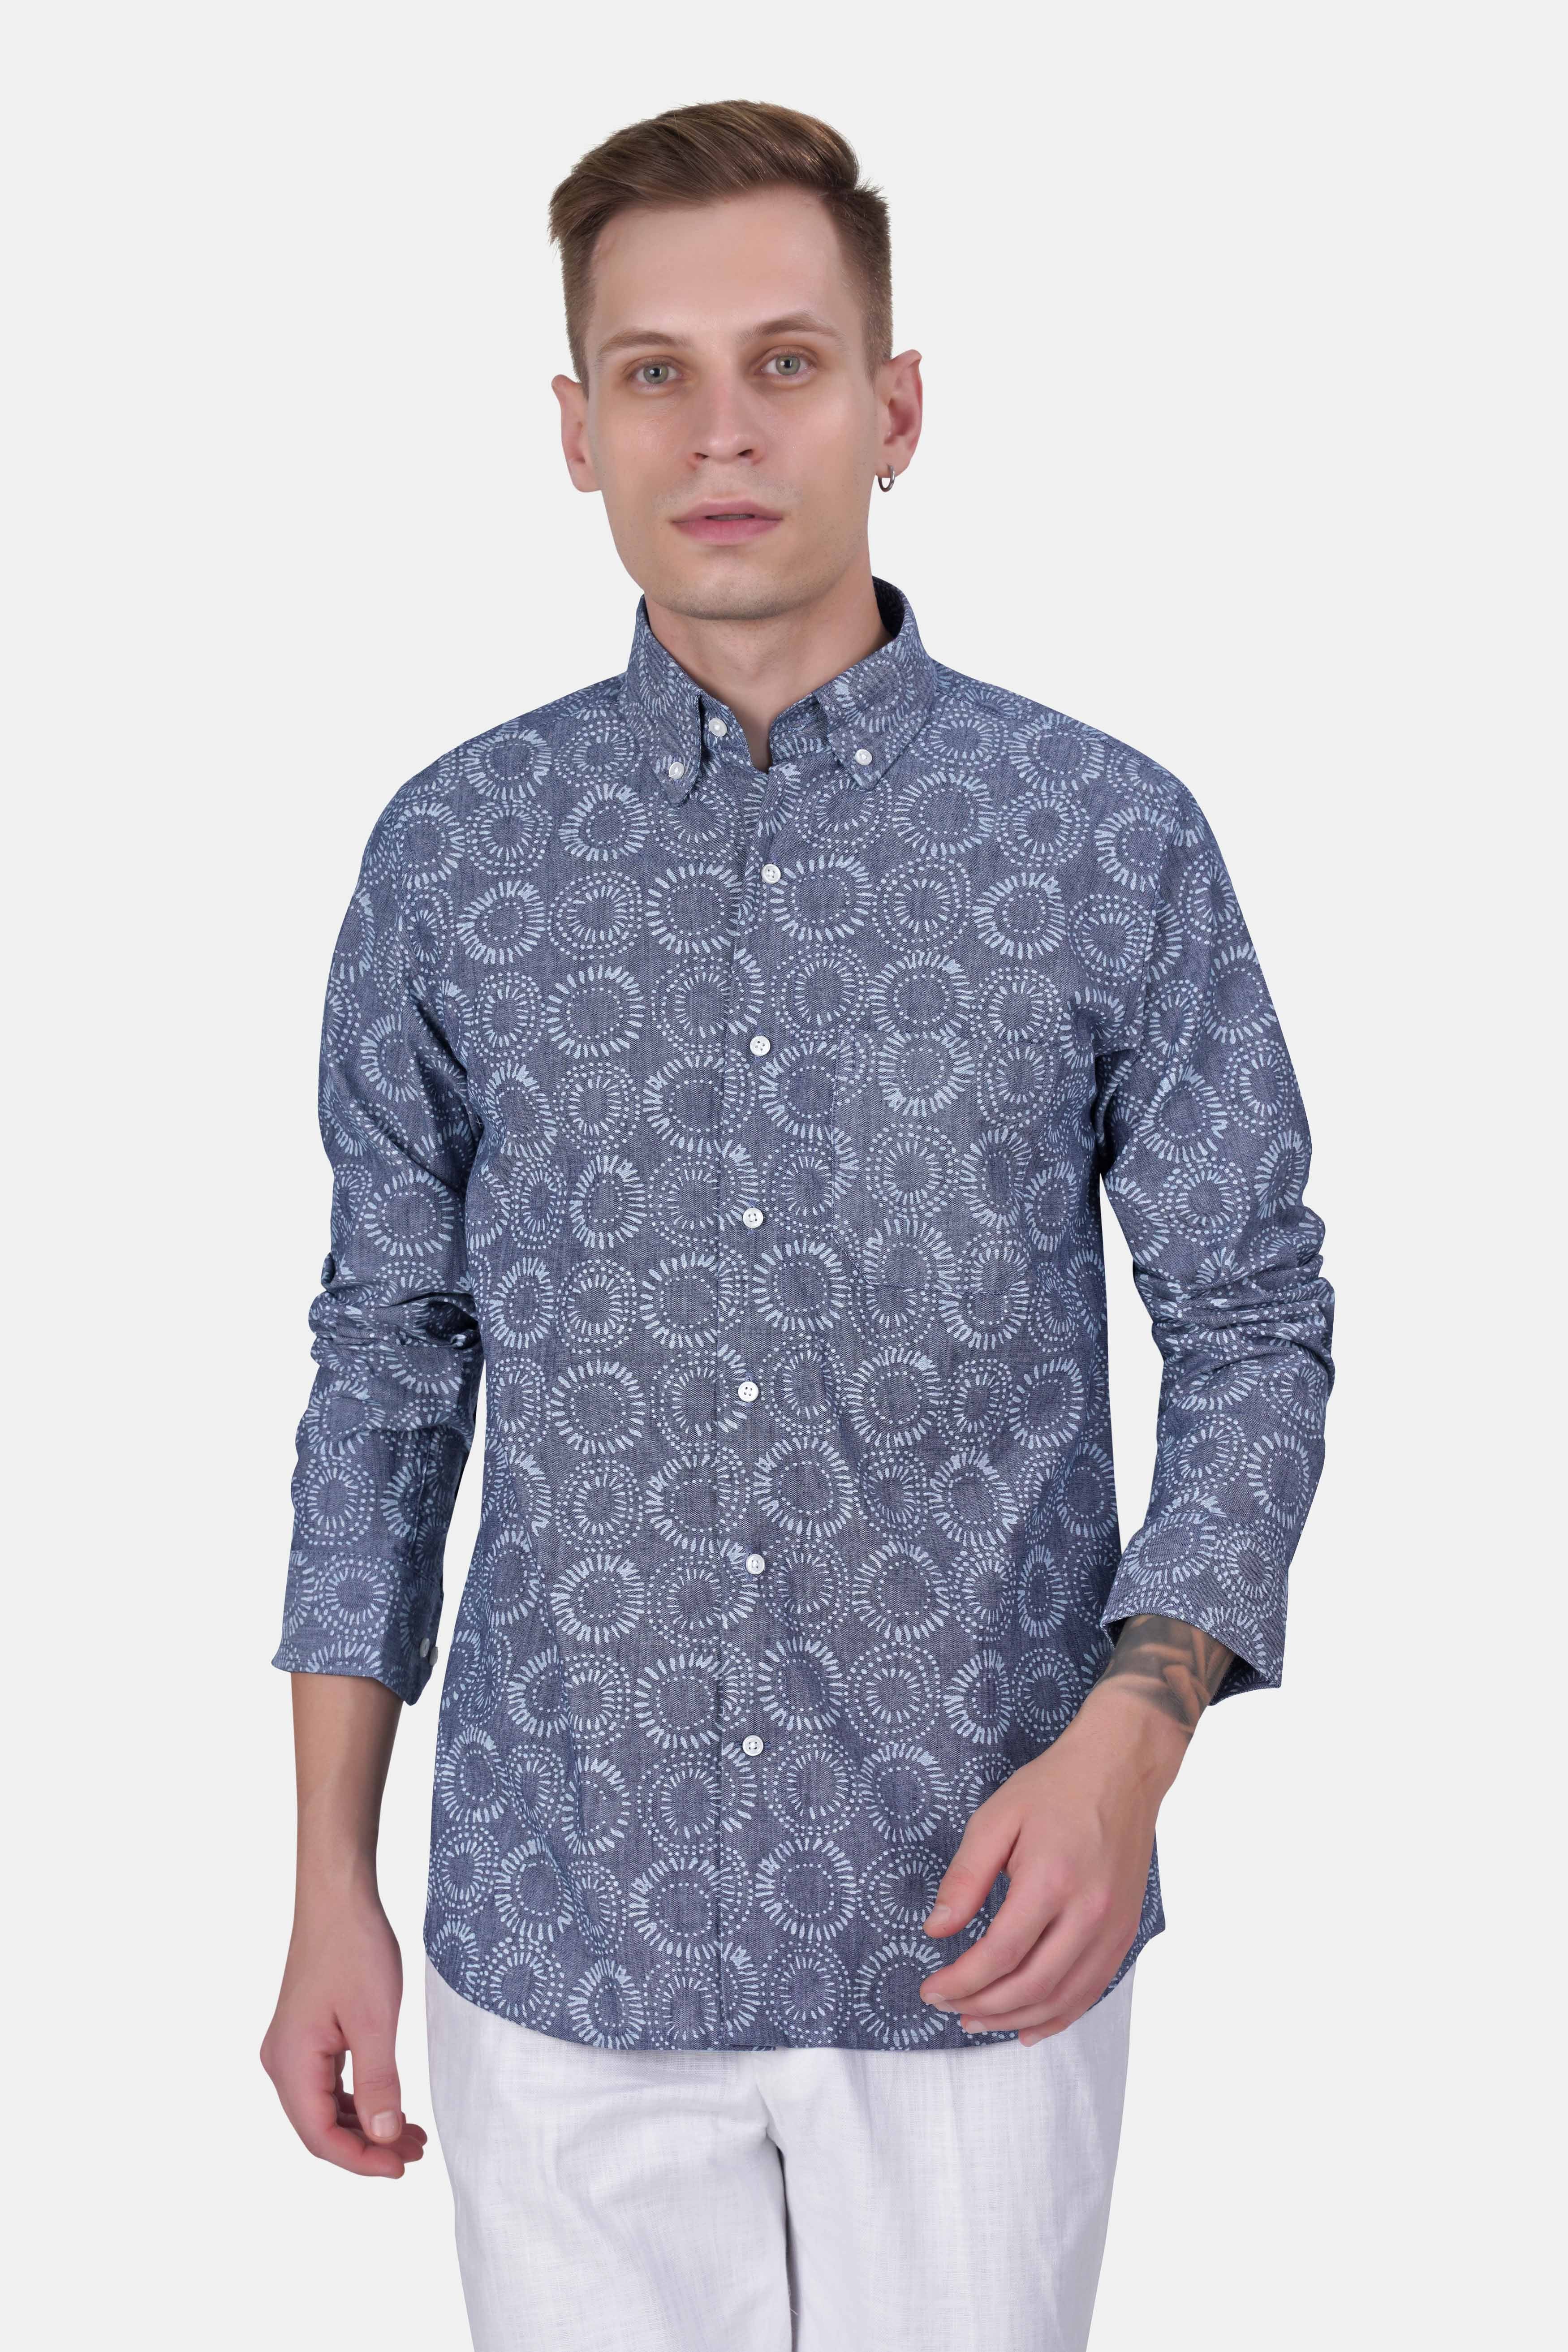 Fiord Blue and White Batik Printed Denim Shirt